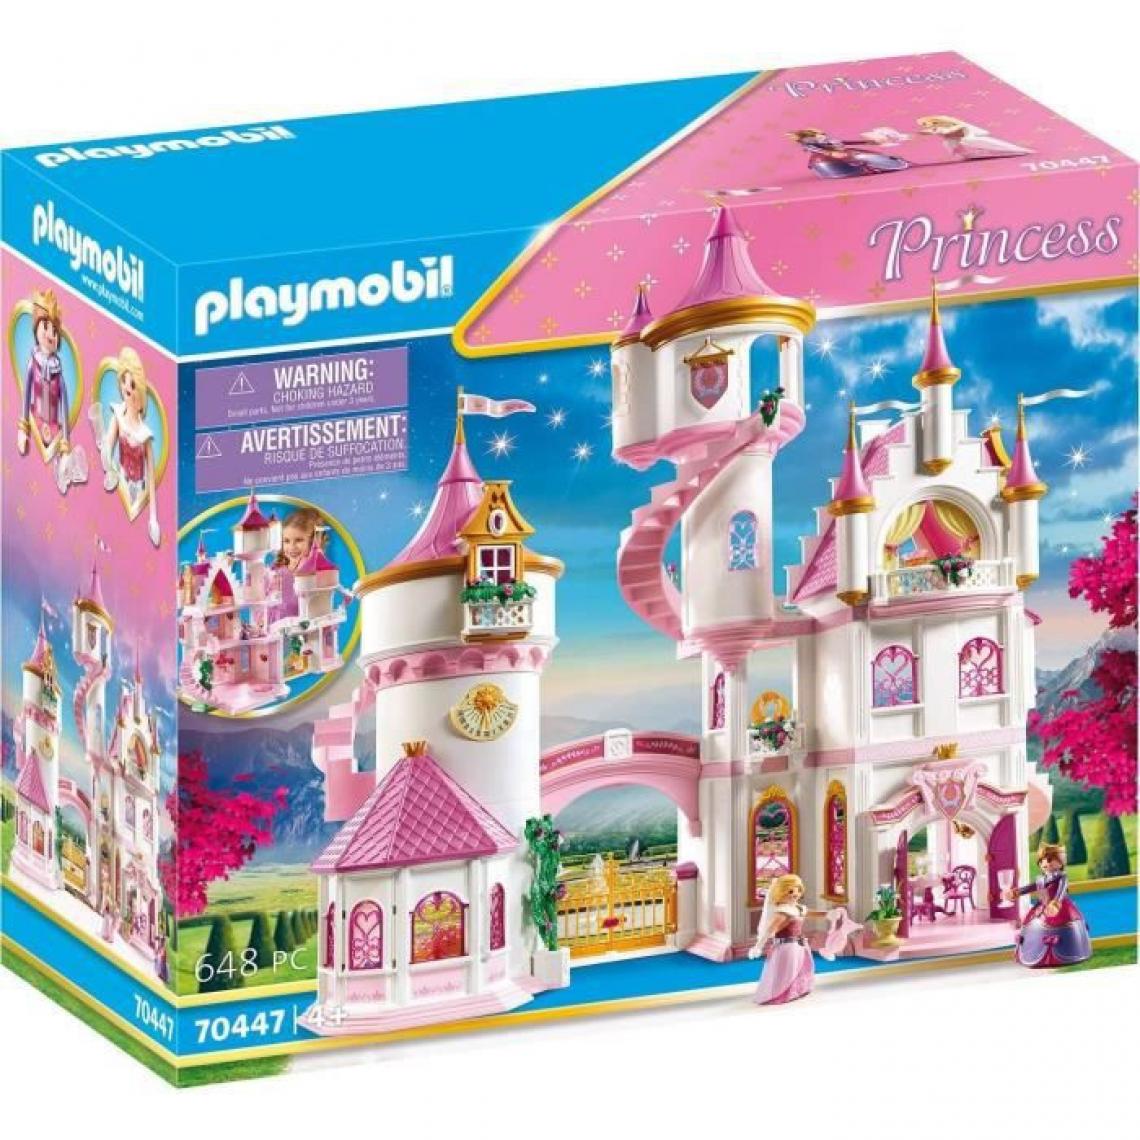 Playmobil - PLAYMOBIL - 70447 - Grand palais de princesse - Playmobil